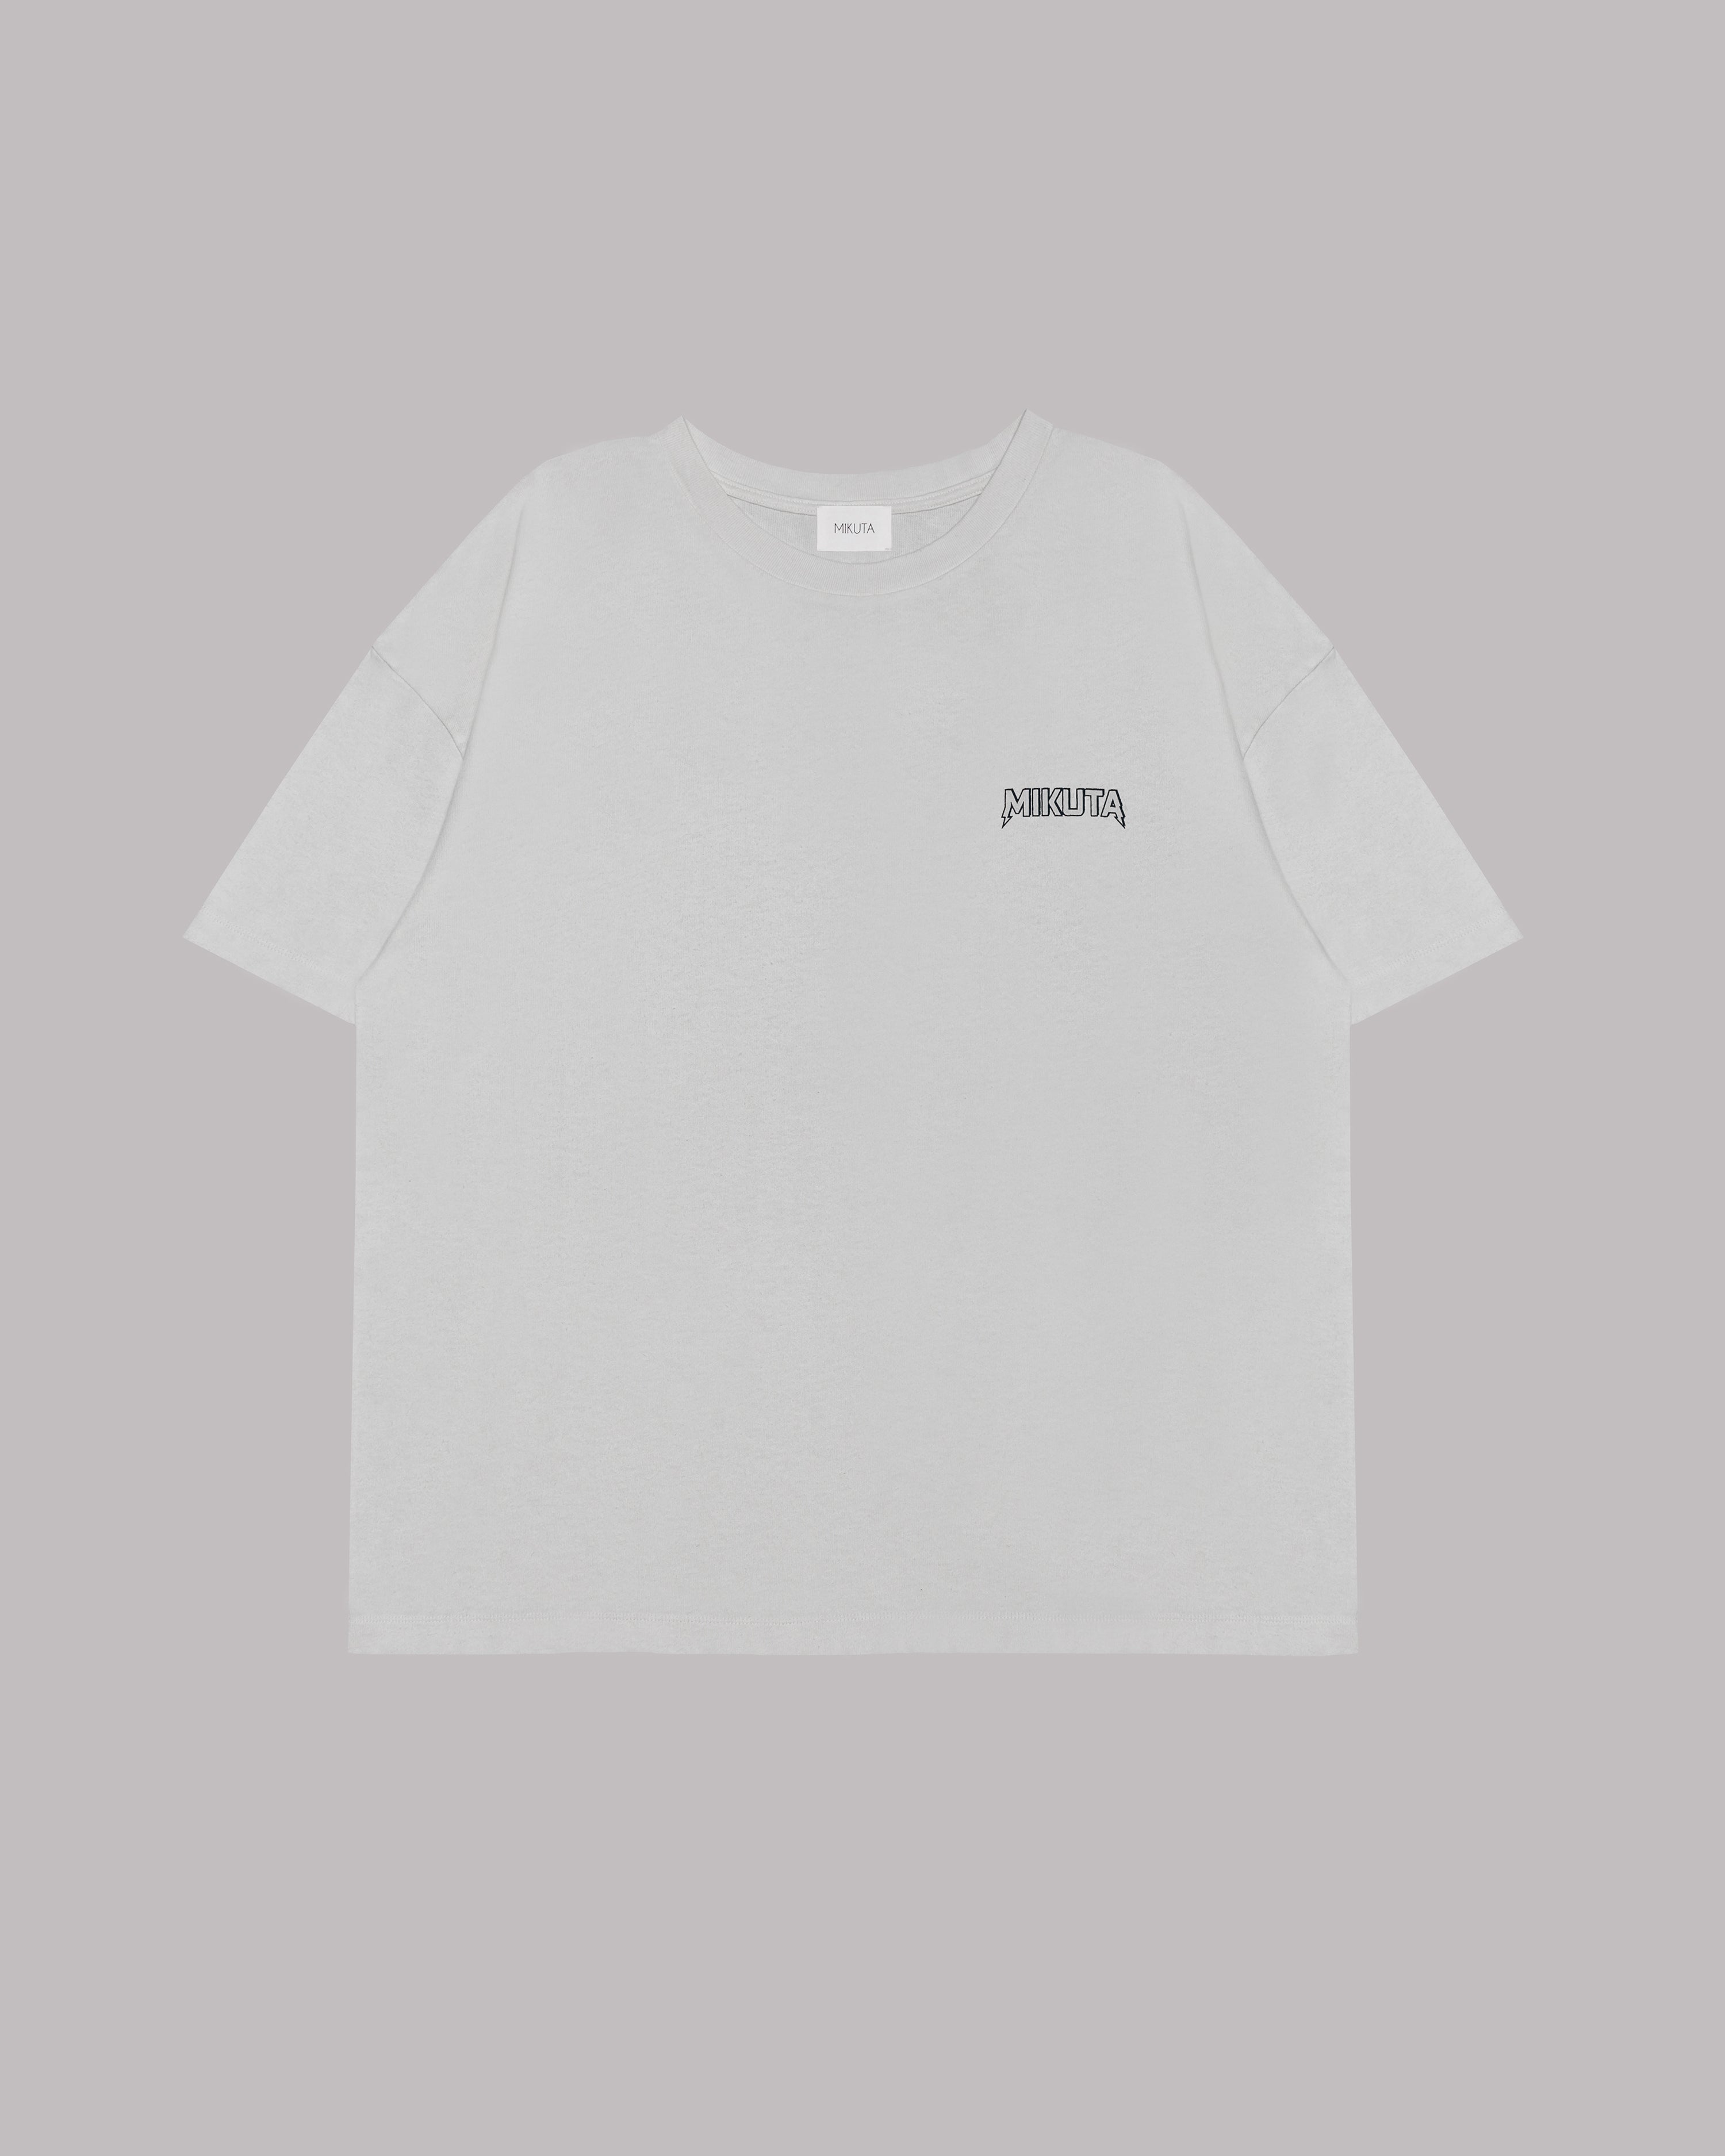 The Off White Rock Vintage Unisex T-Shirt